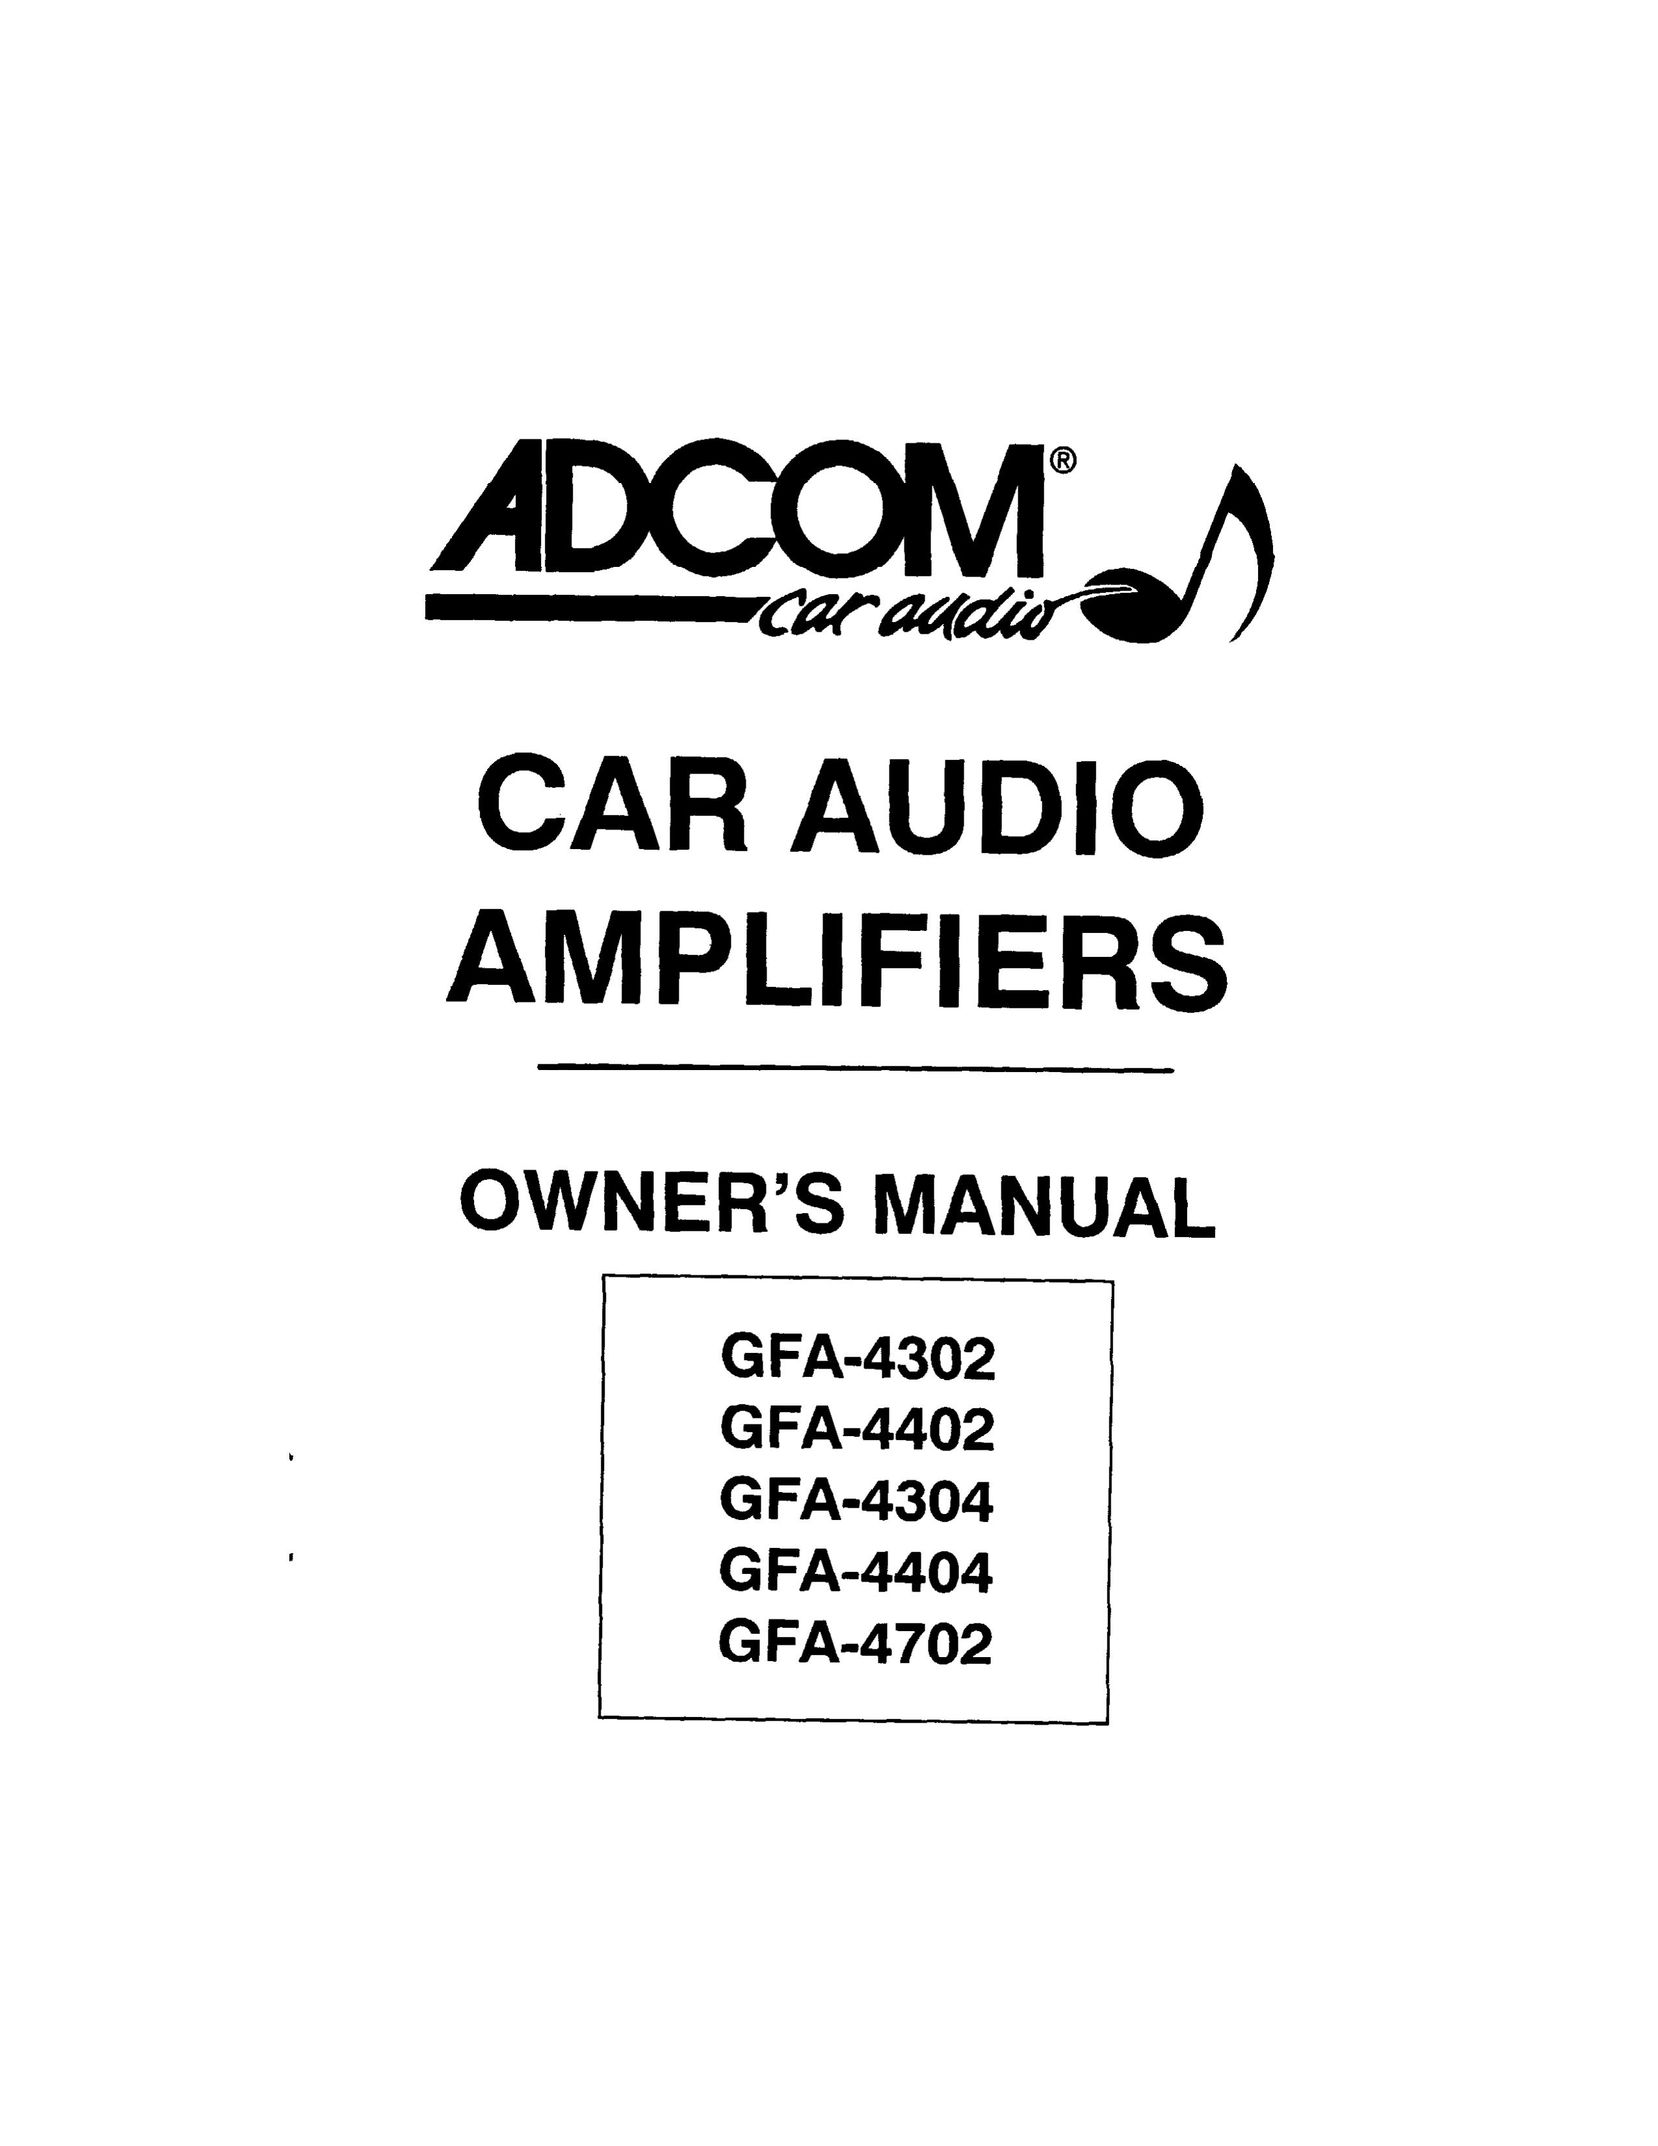 Adcom GFA-4402 Car Amplifier User Manual